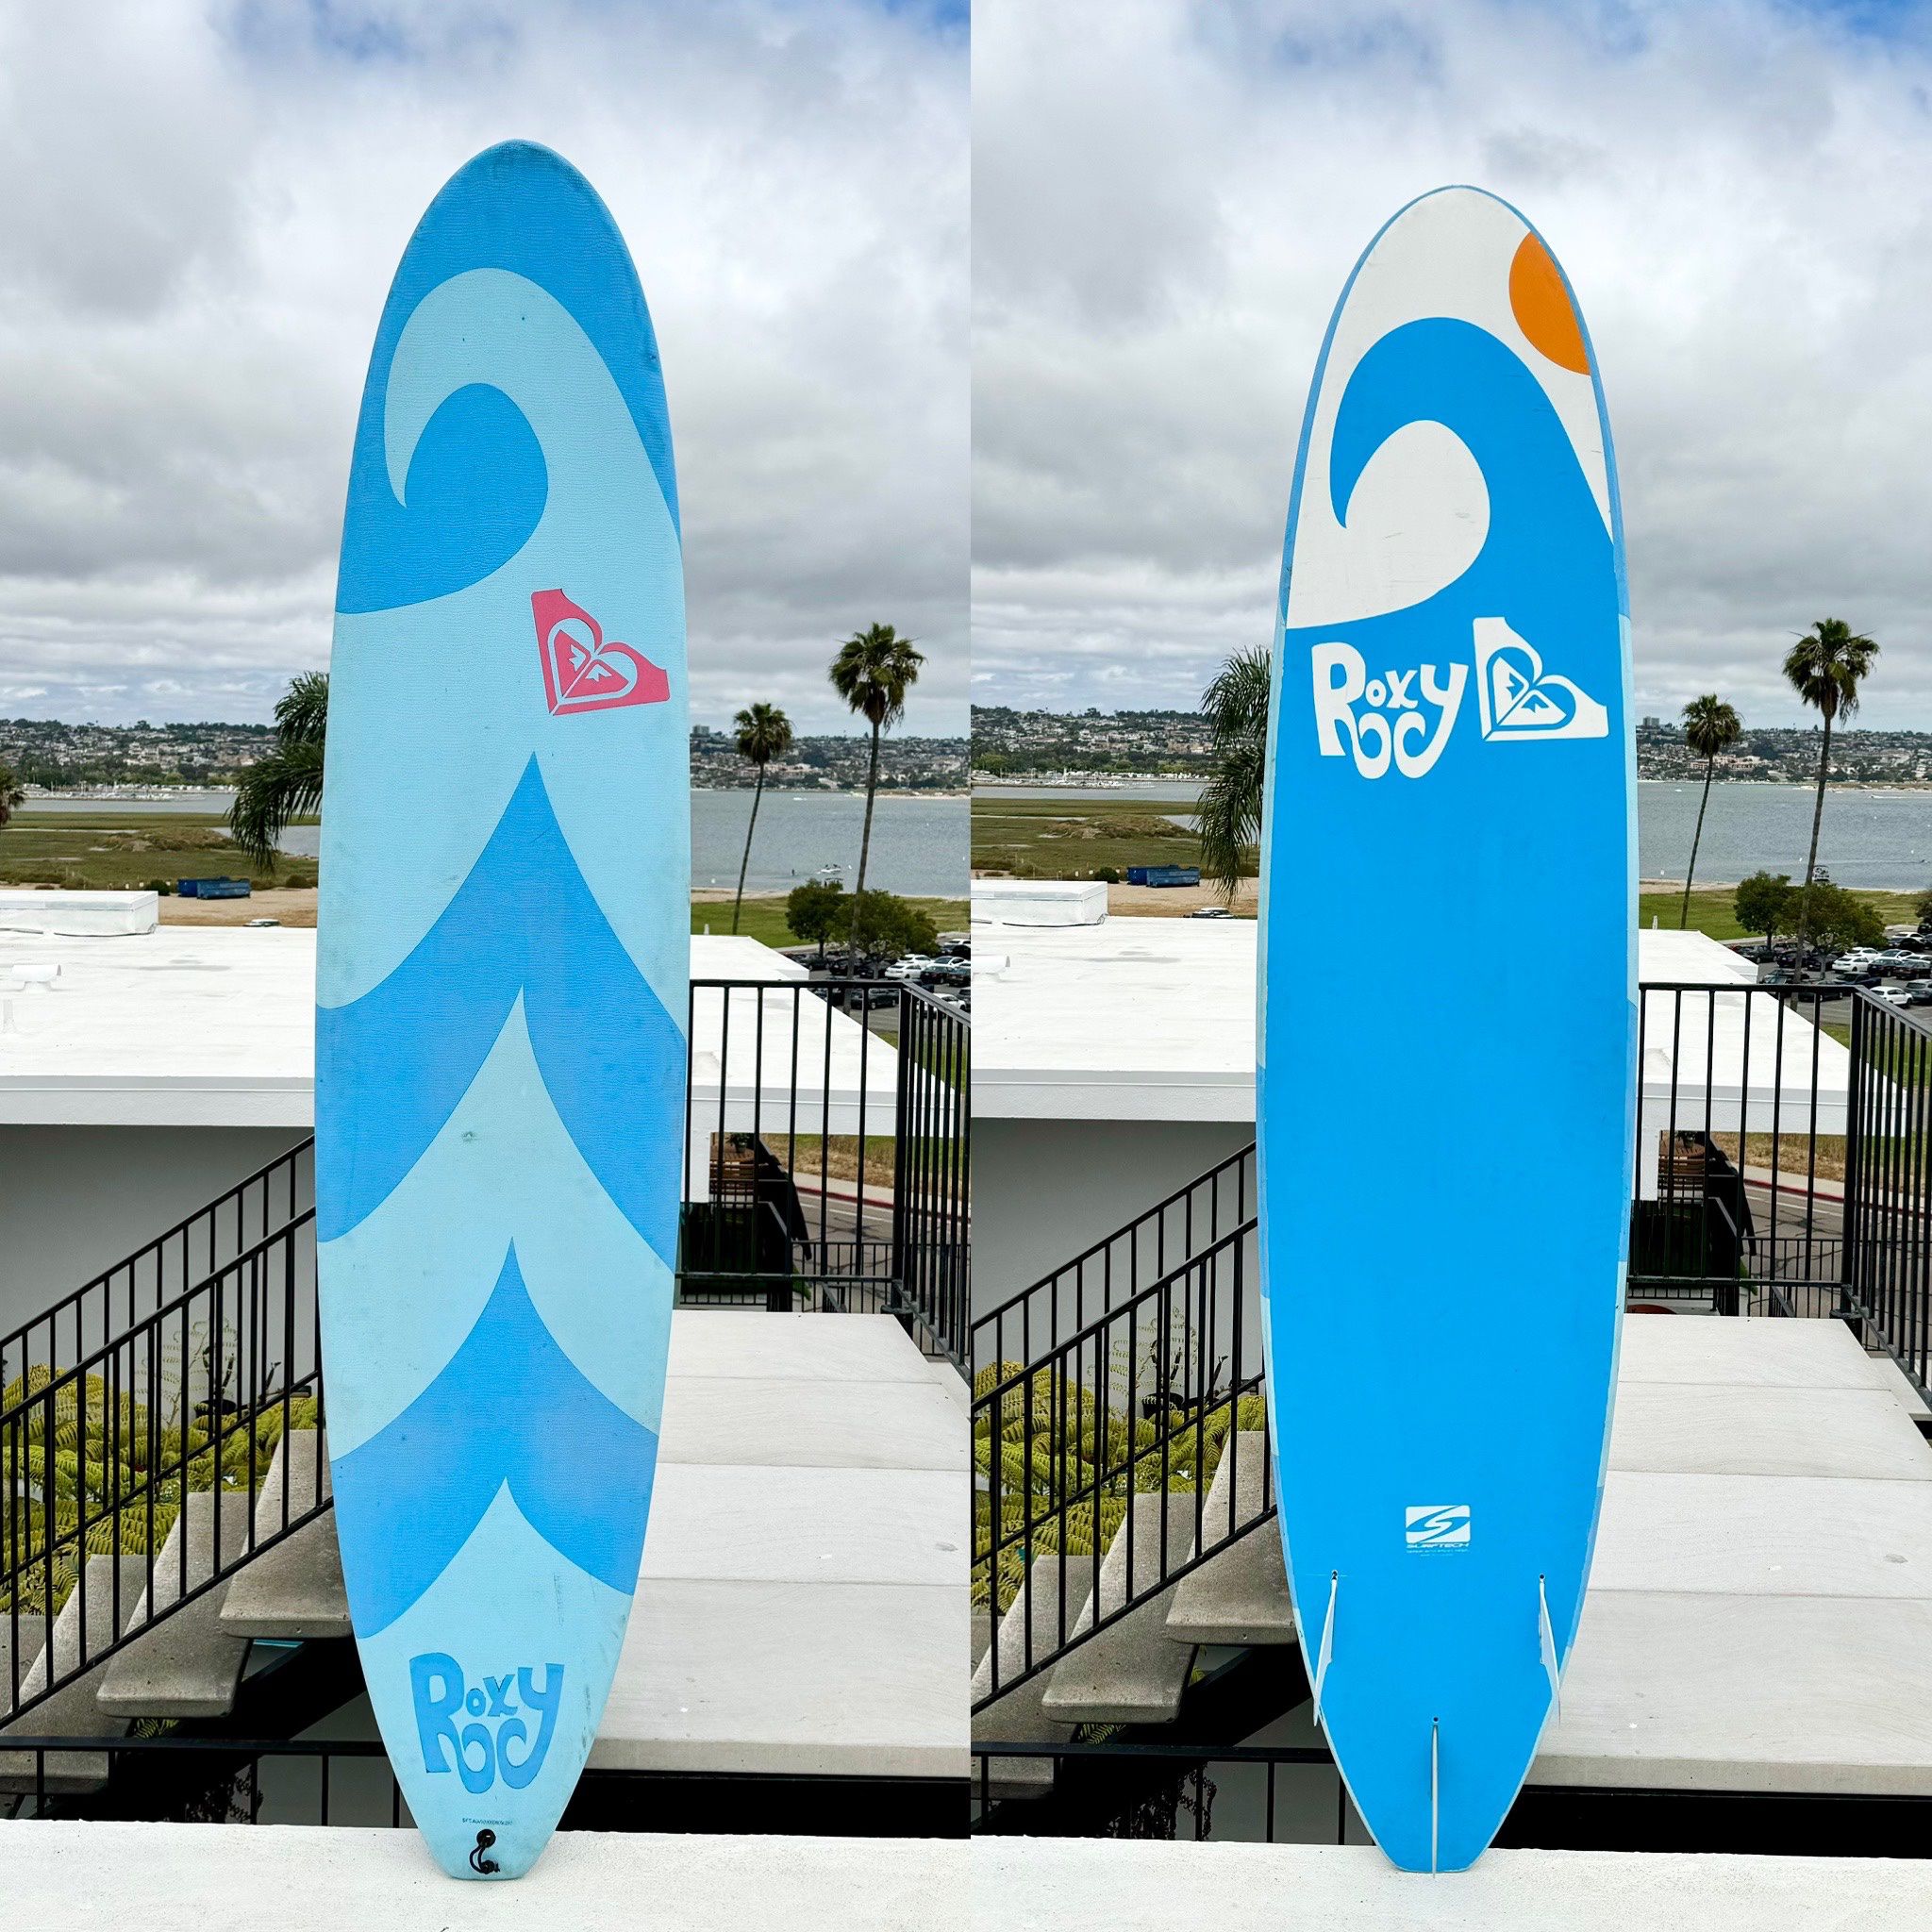 8’ Roxy Epoxy + Soft Top Beginner / Intermediate surfboard w/ premium fins and leash!